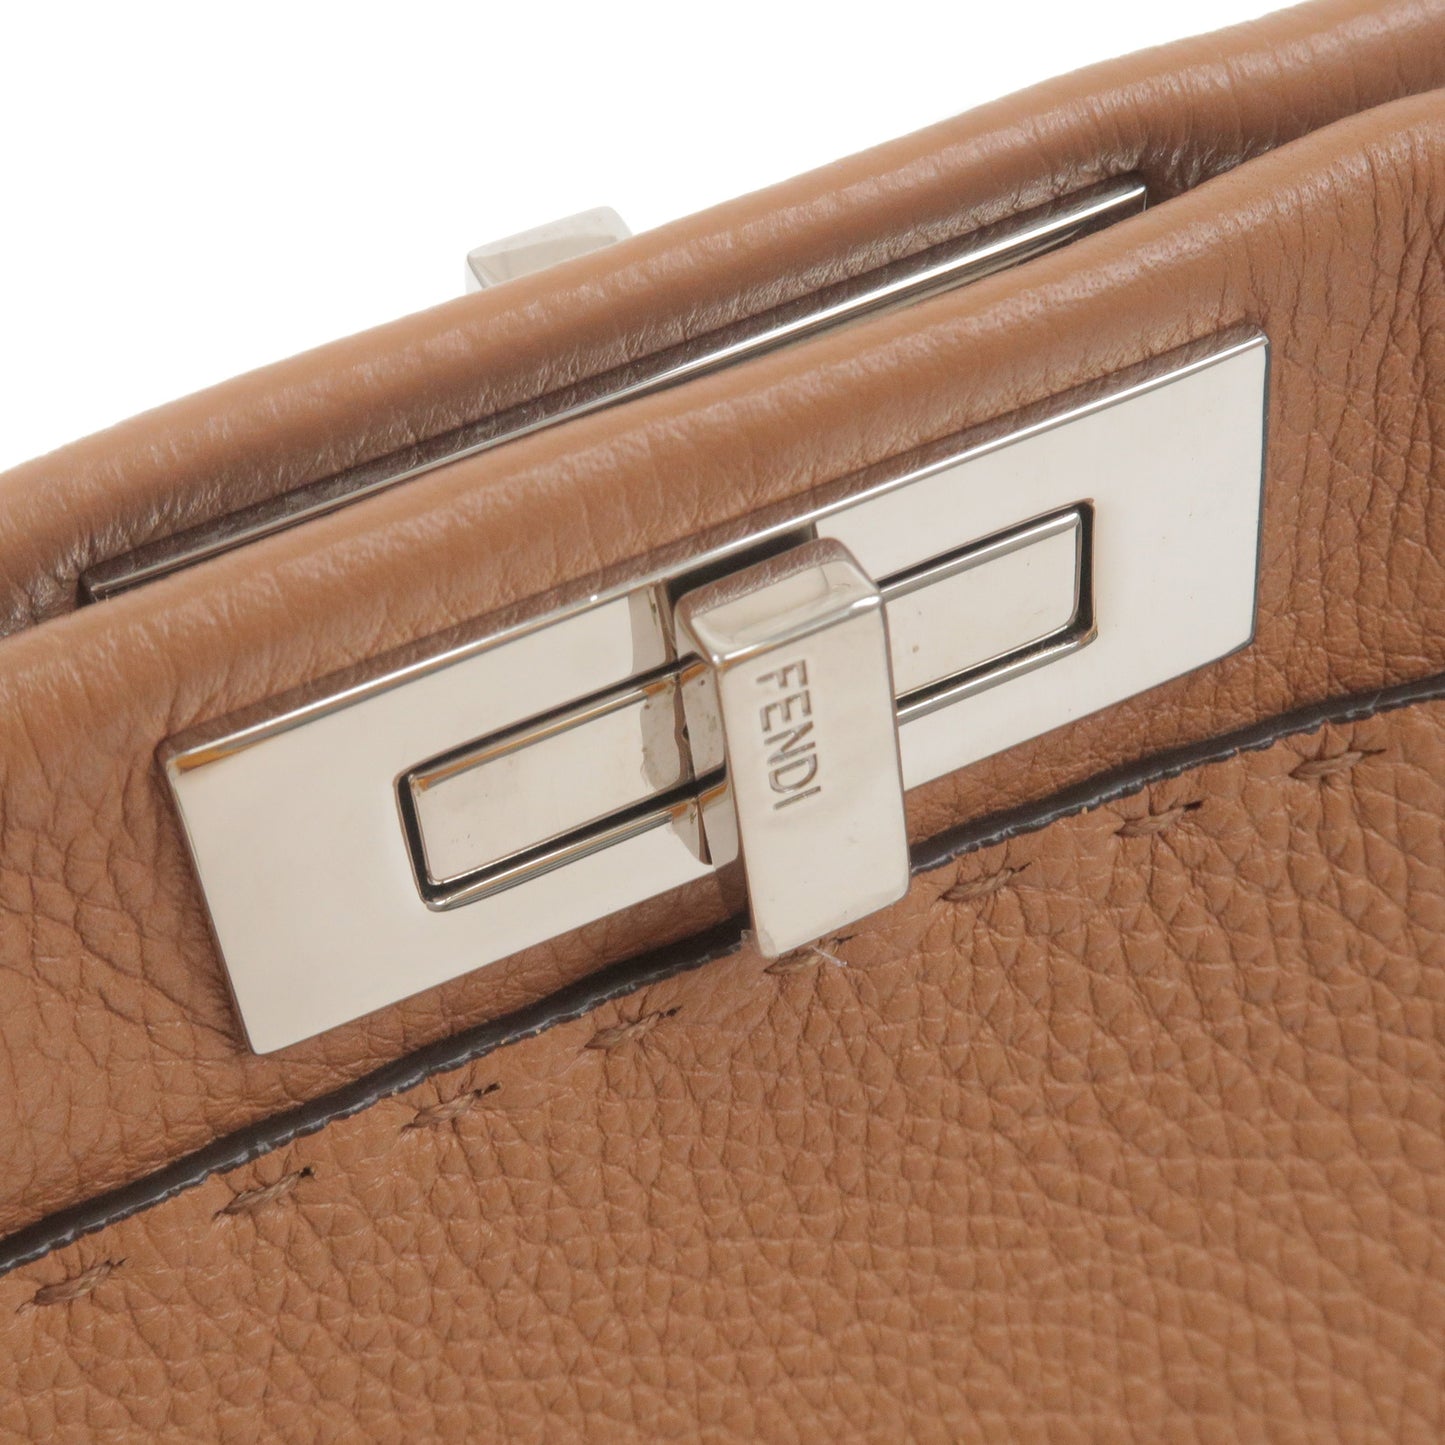 FENDI Selleria Peekaboo Regular Leather 2Way Shoulder Bag 8BN290